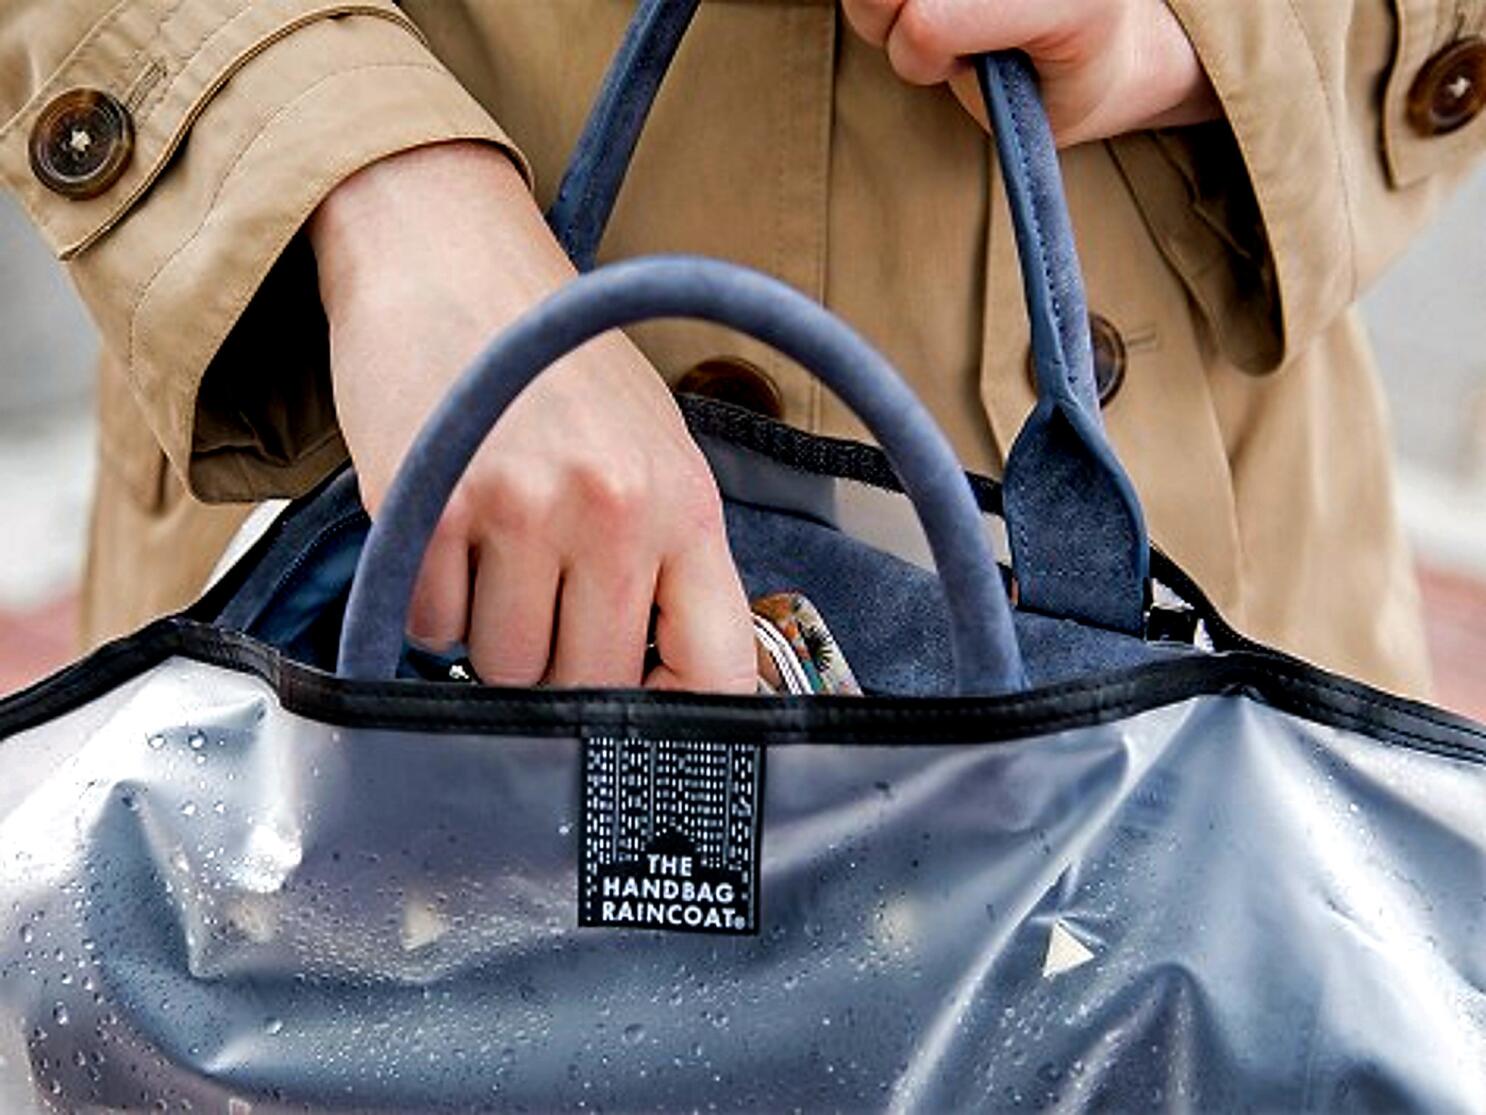 Does Your Handbag Need a Raincoat? - A Few Goody Gumdrops